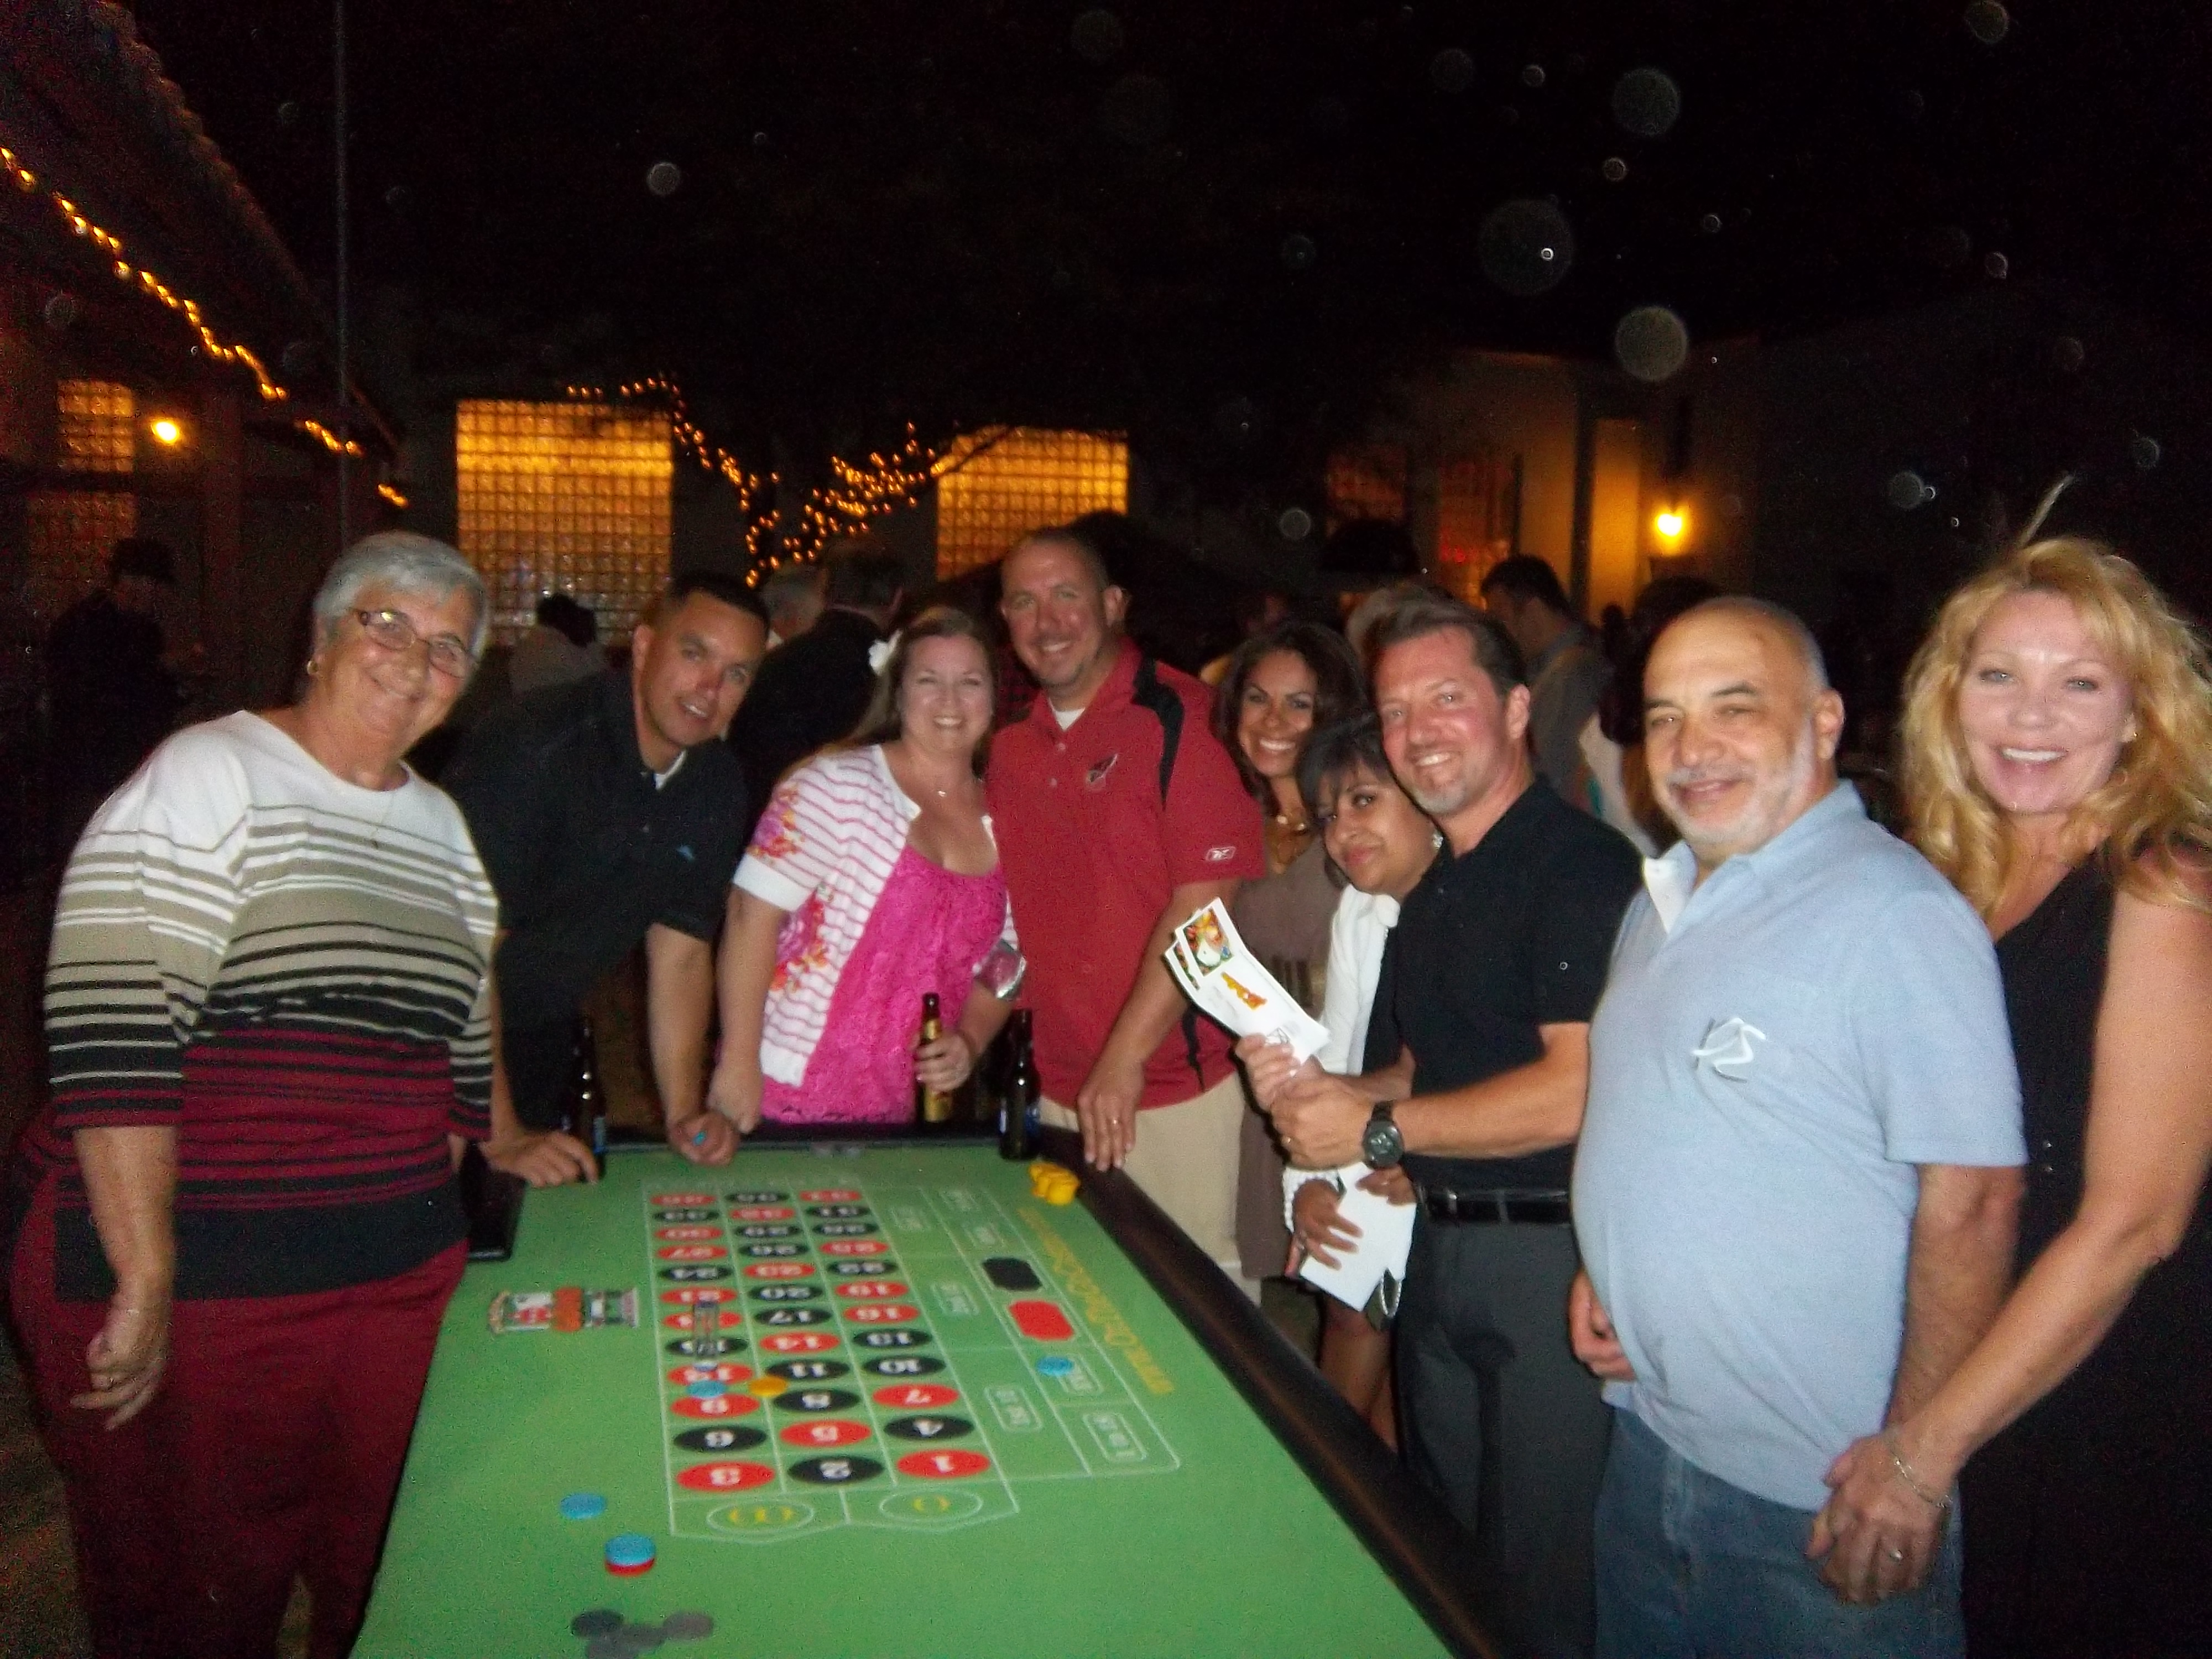 Saint Gregory's Catholic School of Phoenix casino night fundraiser